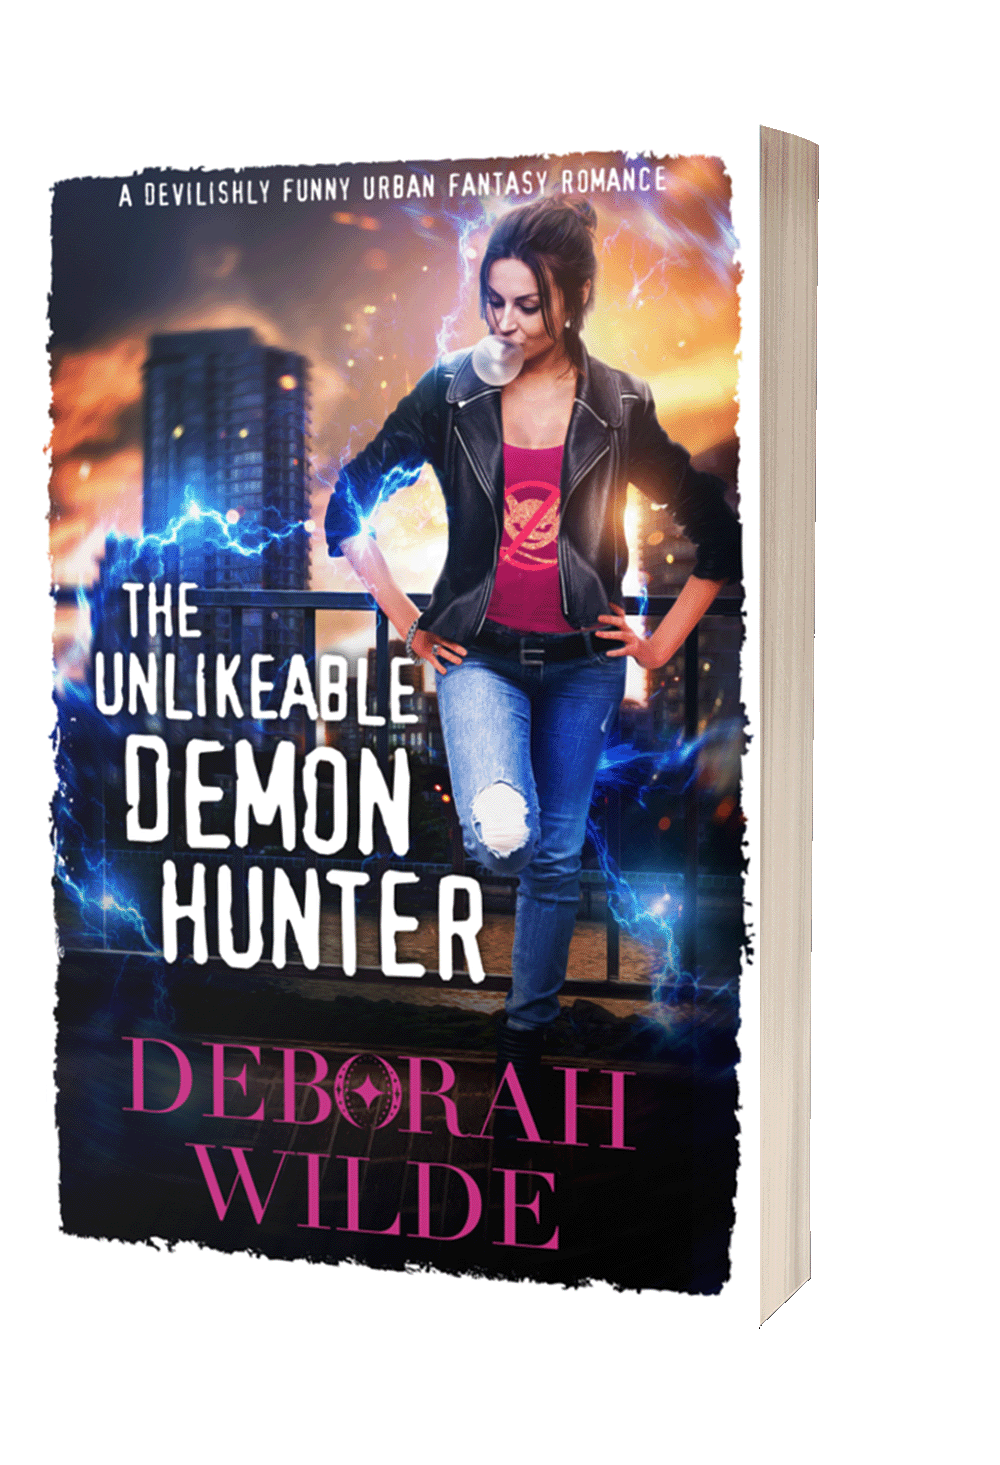 The Unlikeable Demon Hunter, a funny, sexy, urban fantasy from Deborah Wilde.